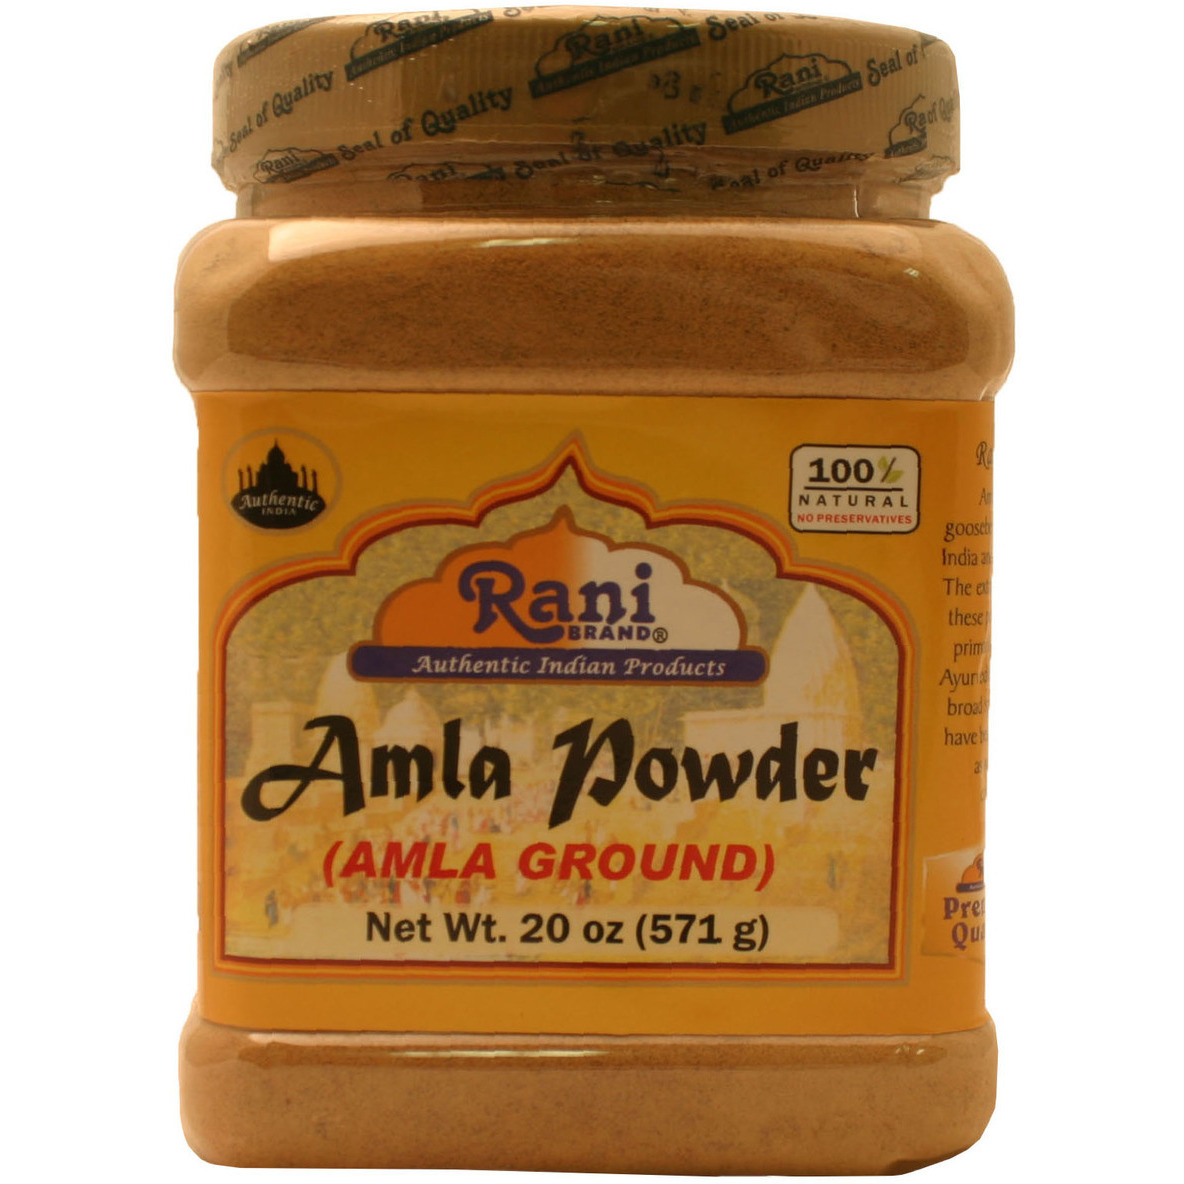 Rani Amla Powder (Indian Gooseberry) 20oz (1lb 4oz)